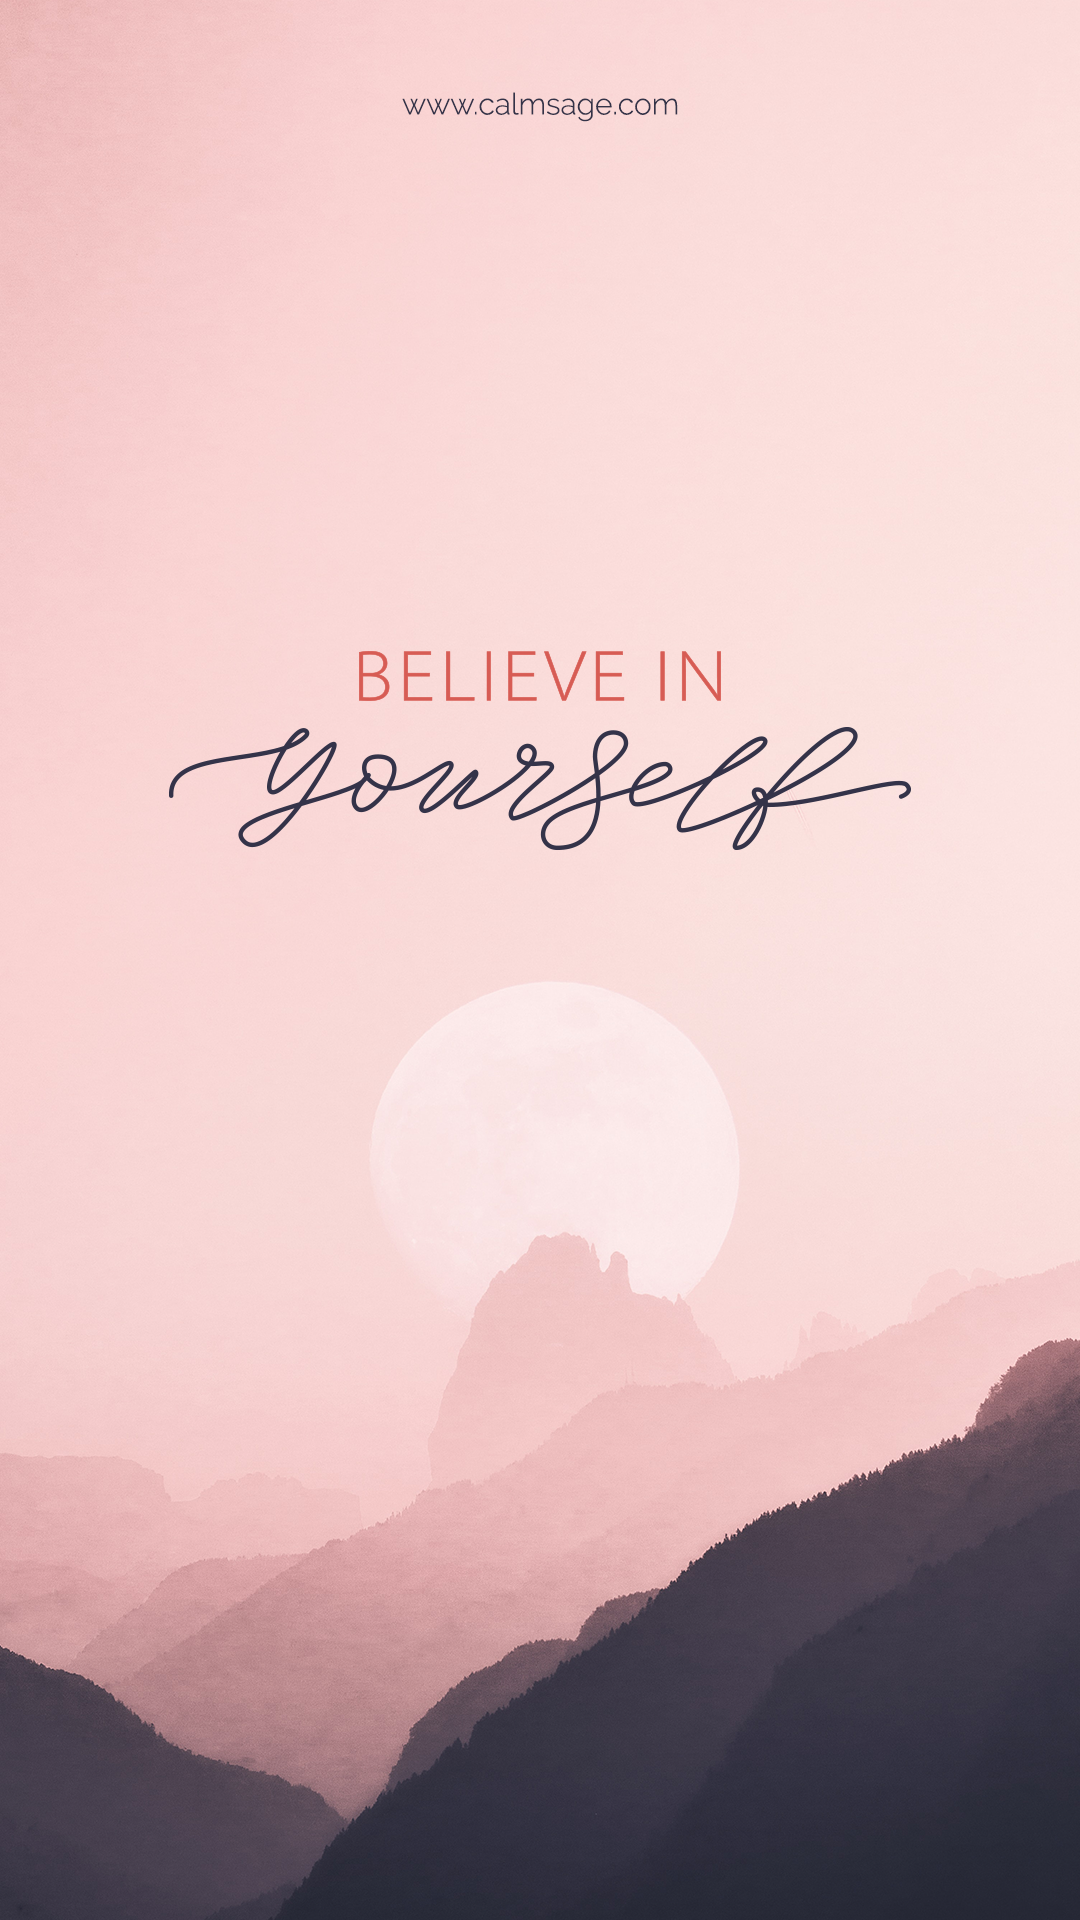 Believe in Yourself – Mobile Wallpaper